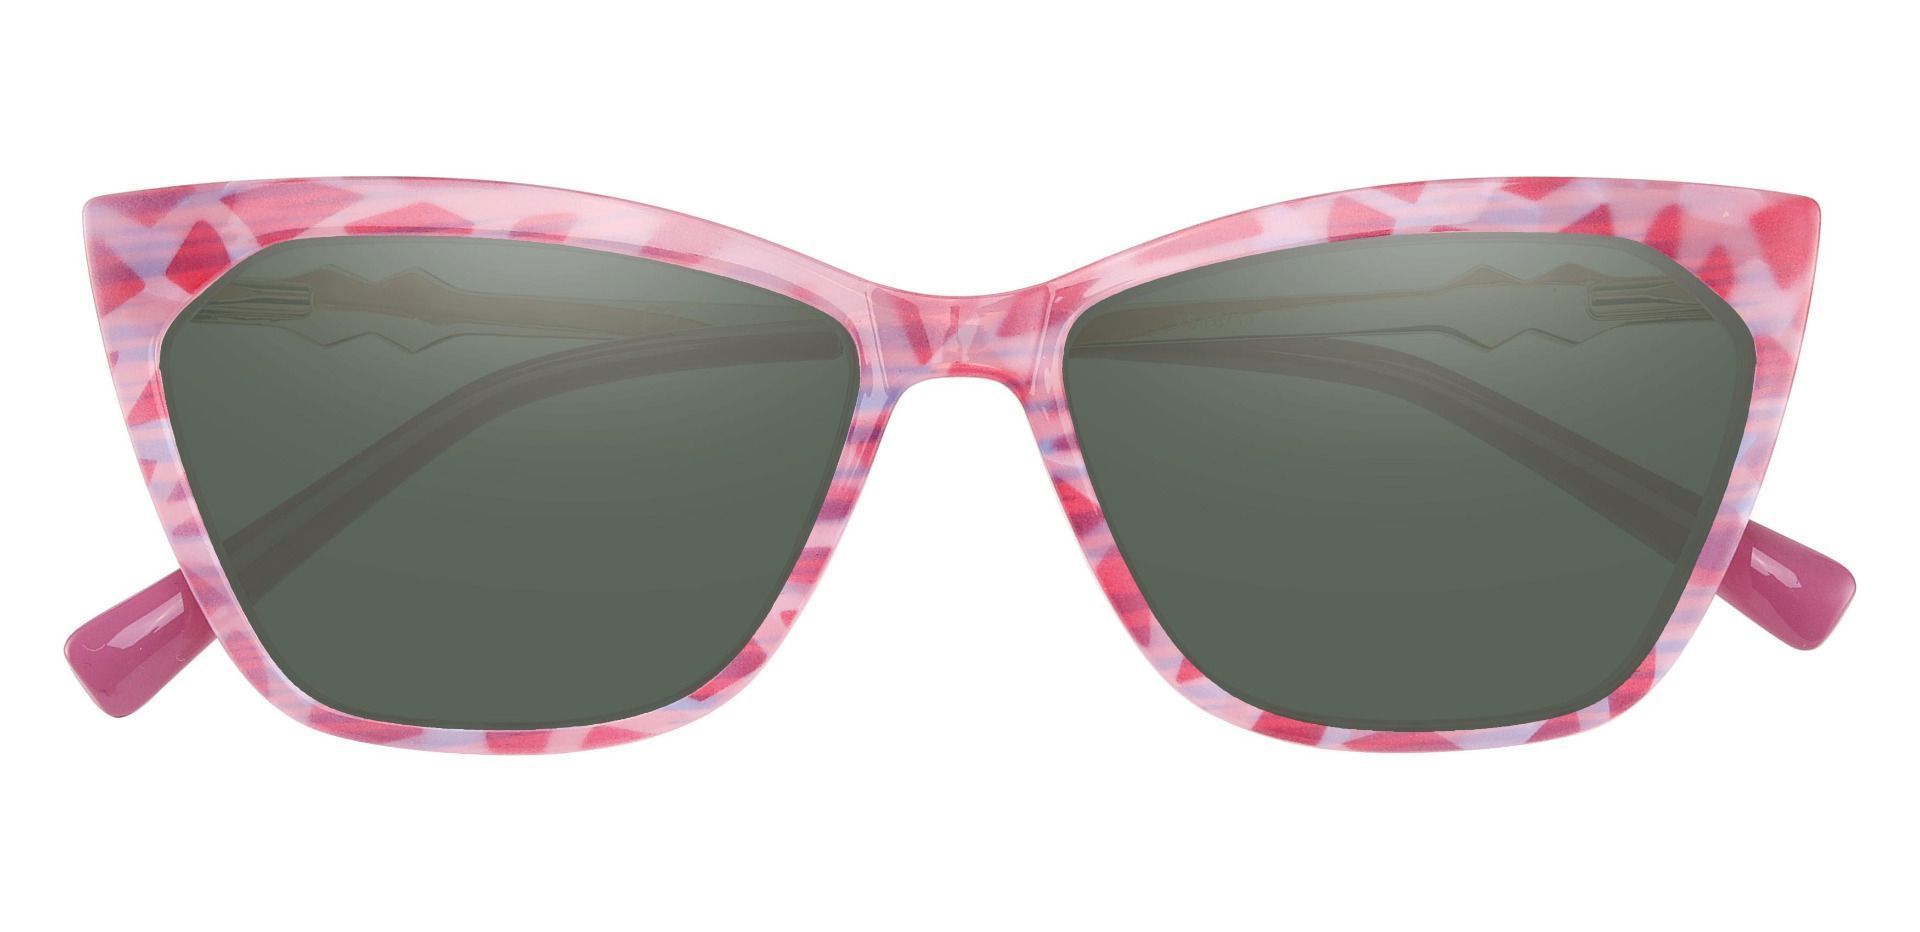 Addison Cat Eye Reading Sunglasses - Pink Frame With Green Lenses